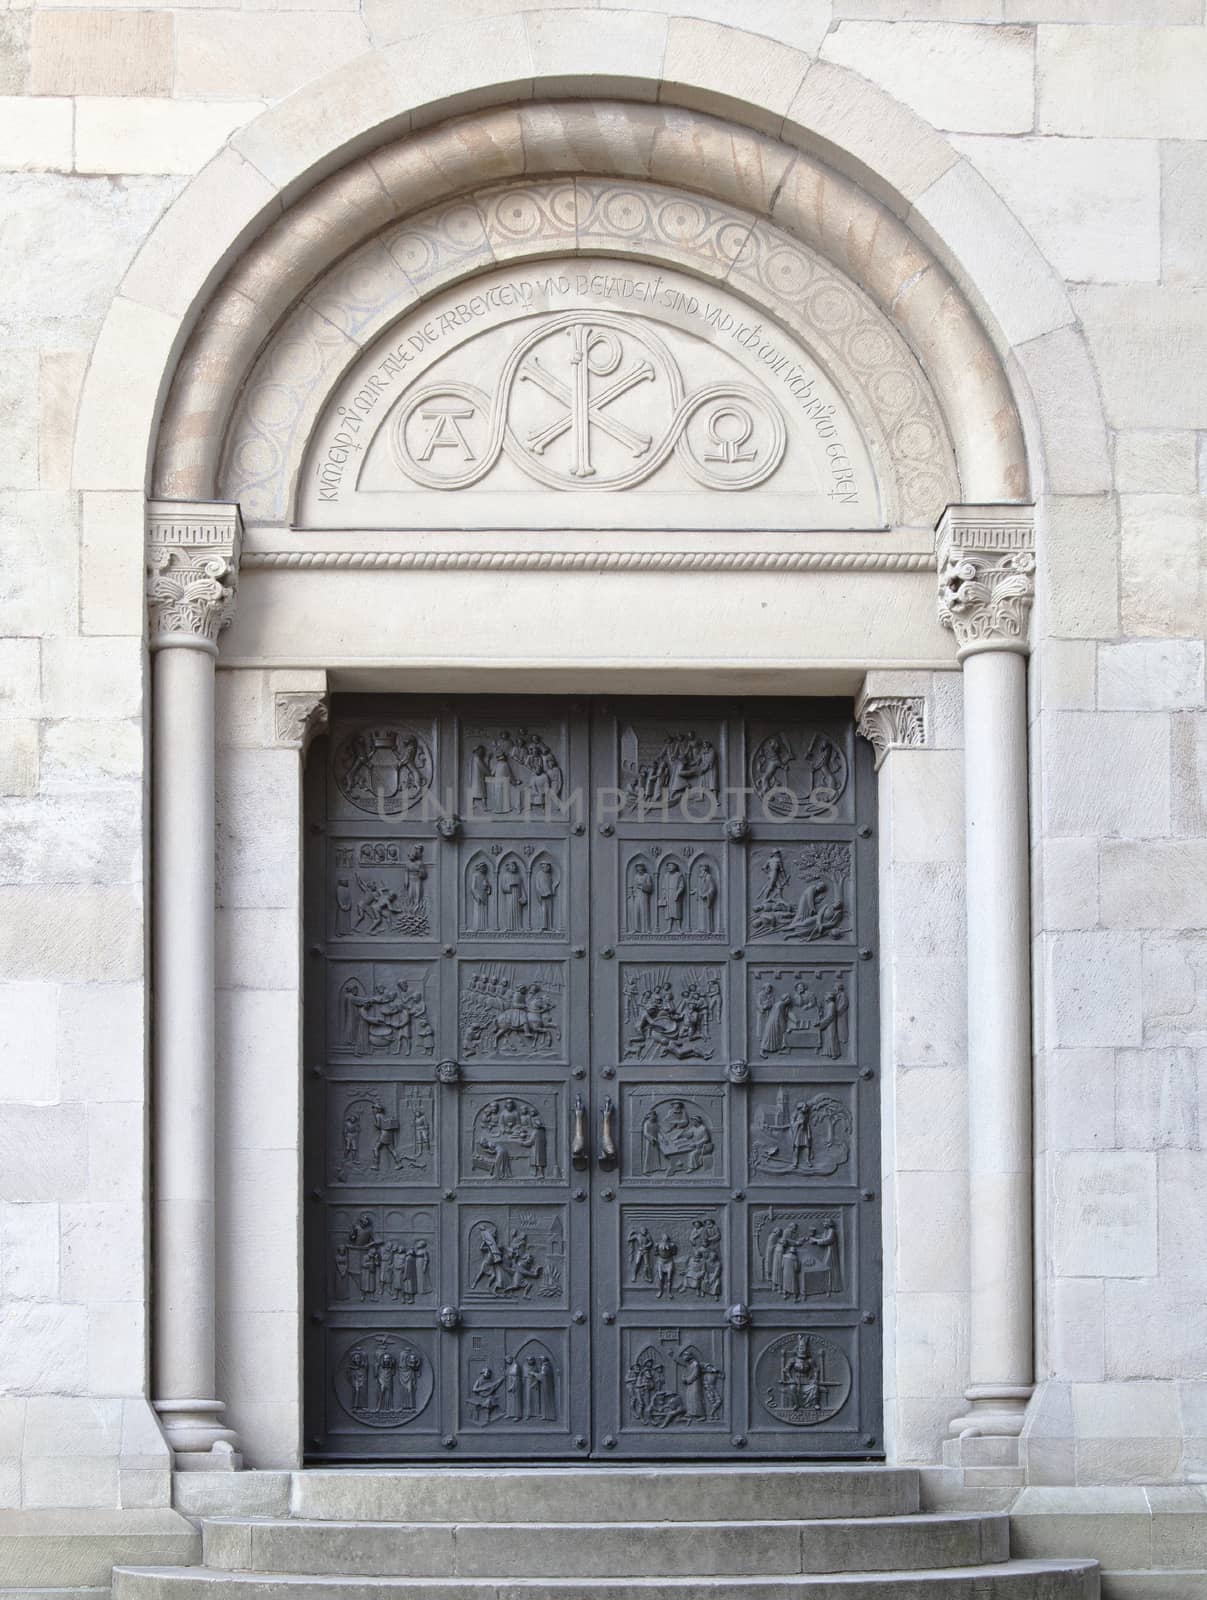 Door of the Grossmunster cathedral in Zurich, Switzerland